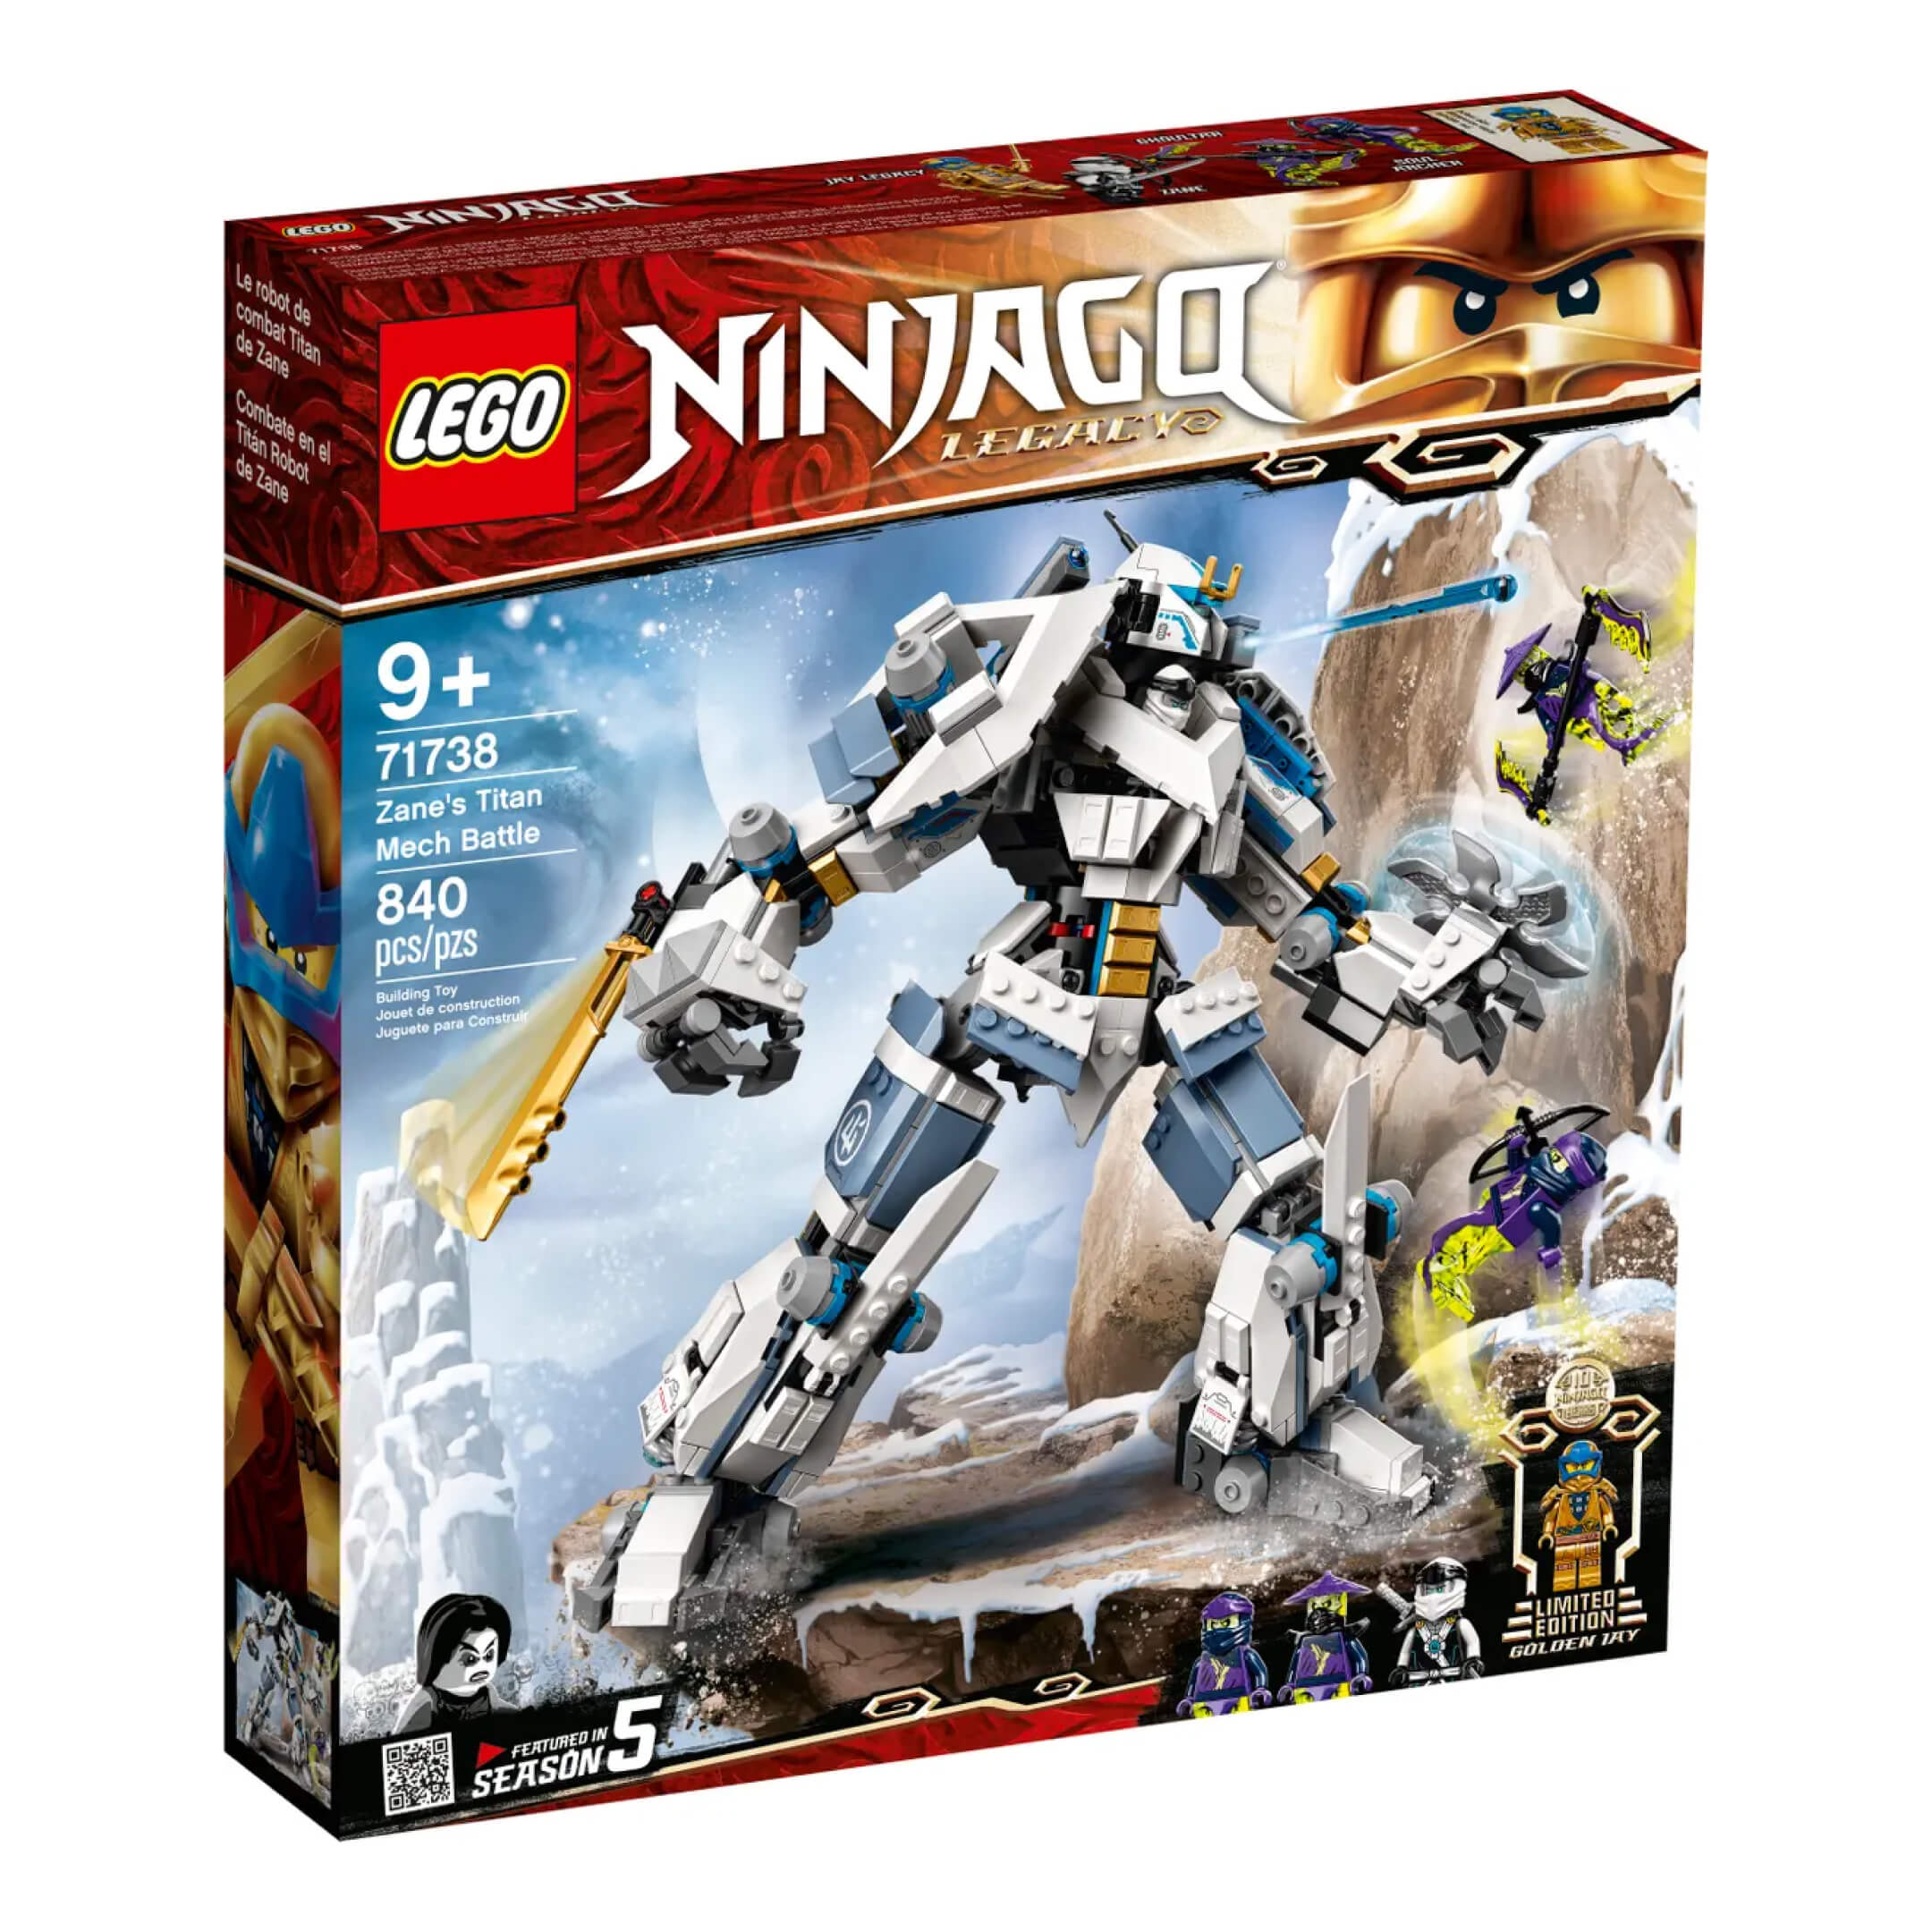 Zanes Titan-Mech (71738) - Lego Ninjago